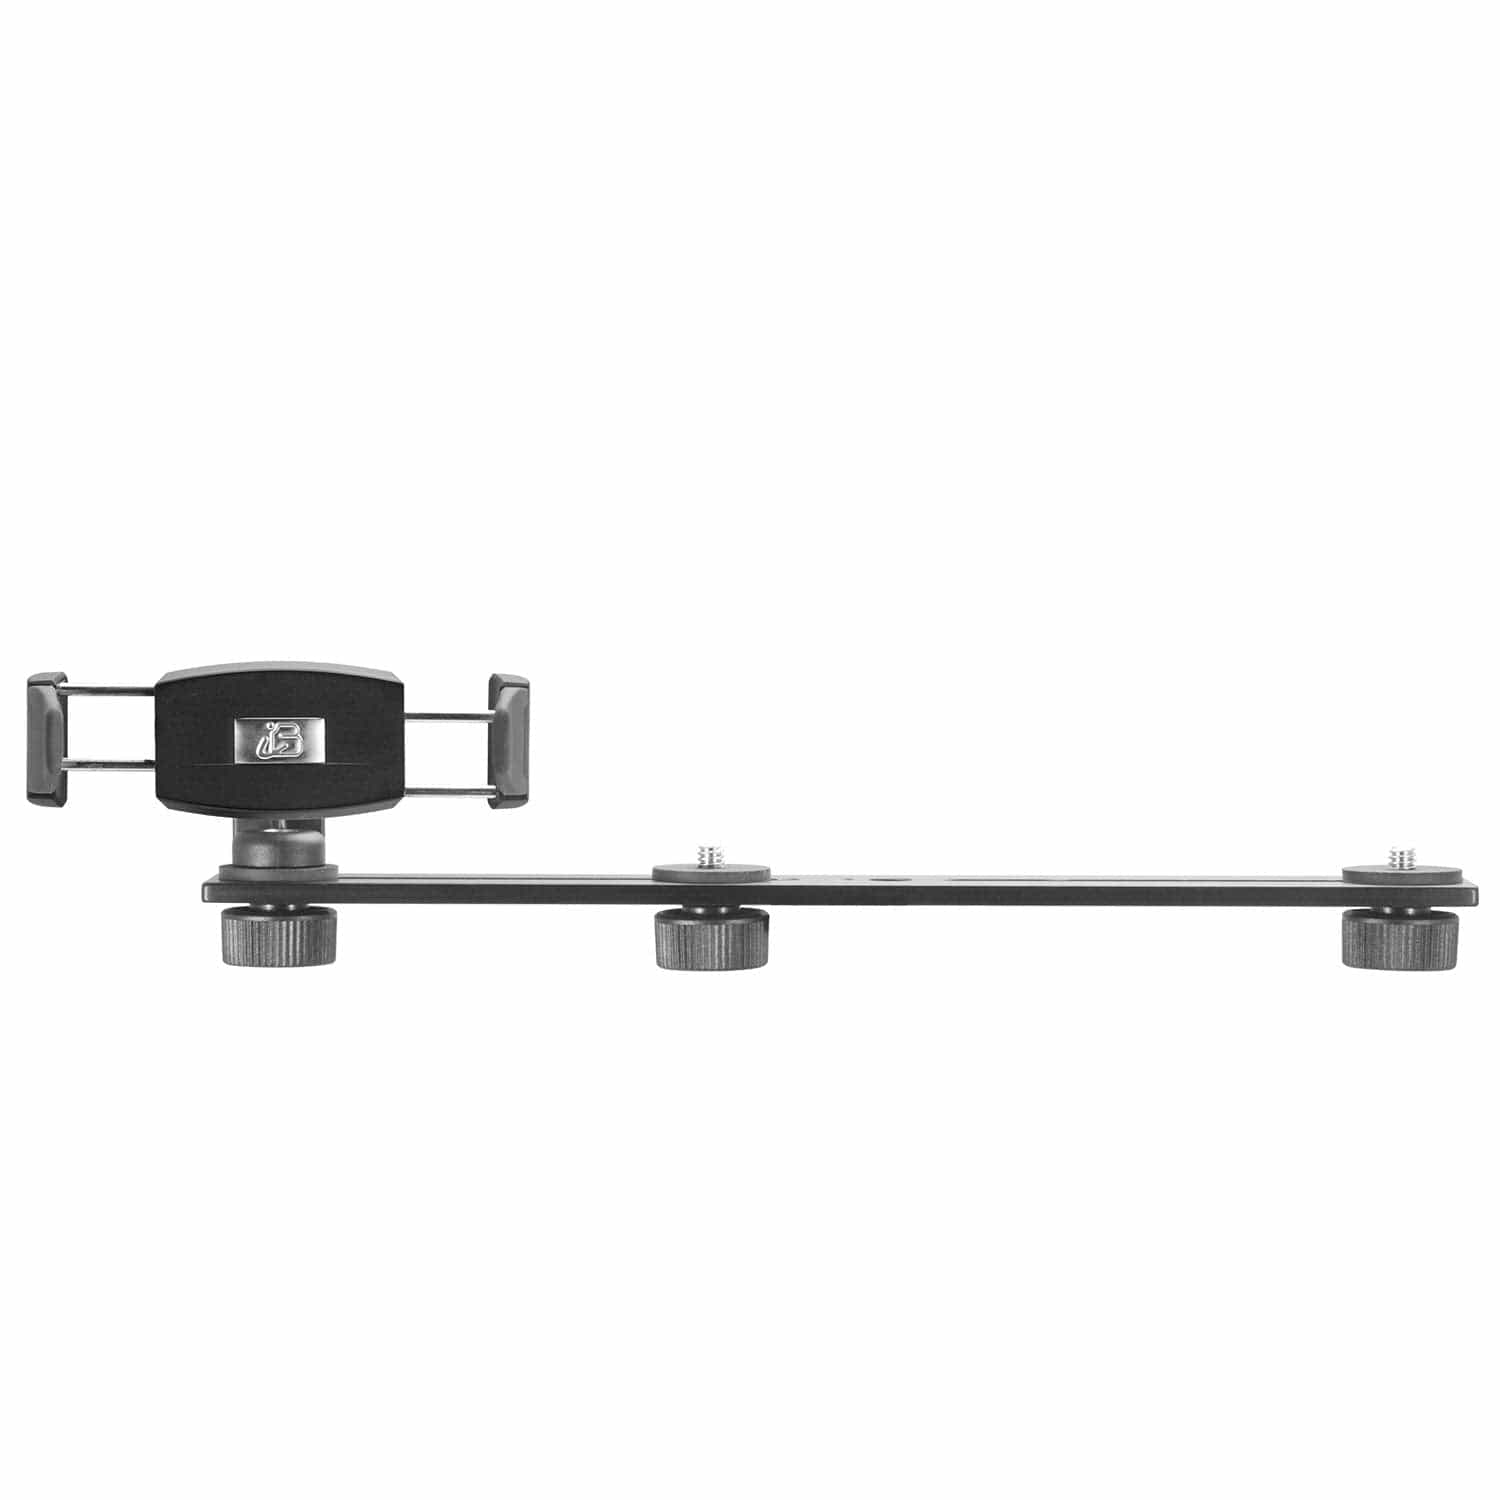 3 Camera Slide Bar with Phone Holder - 10 inch